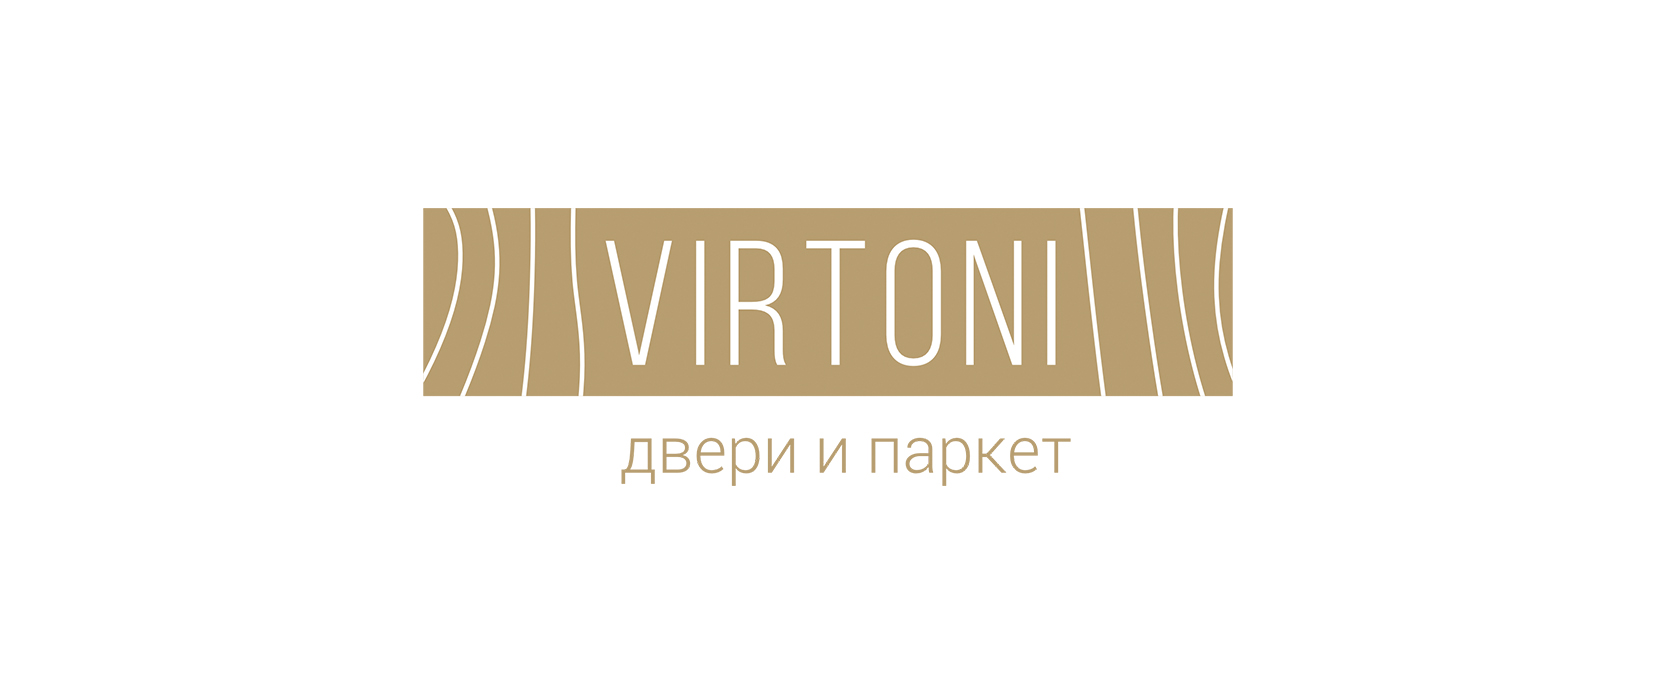 VIRTONI – салон дверей и паркета